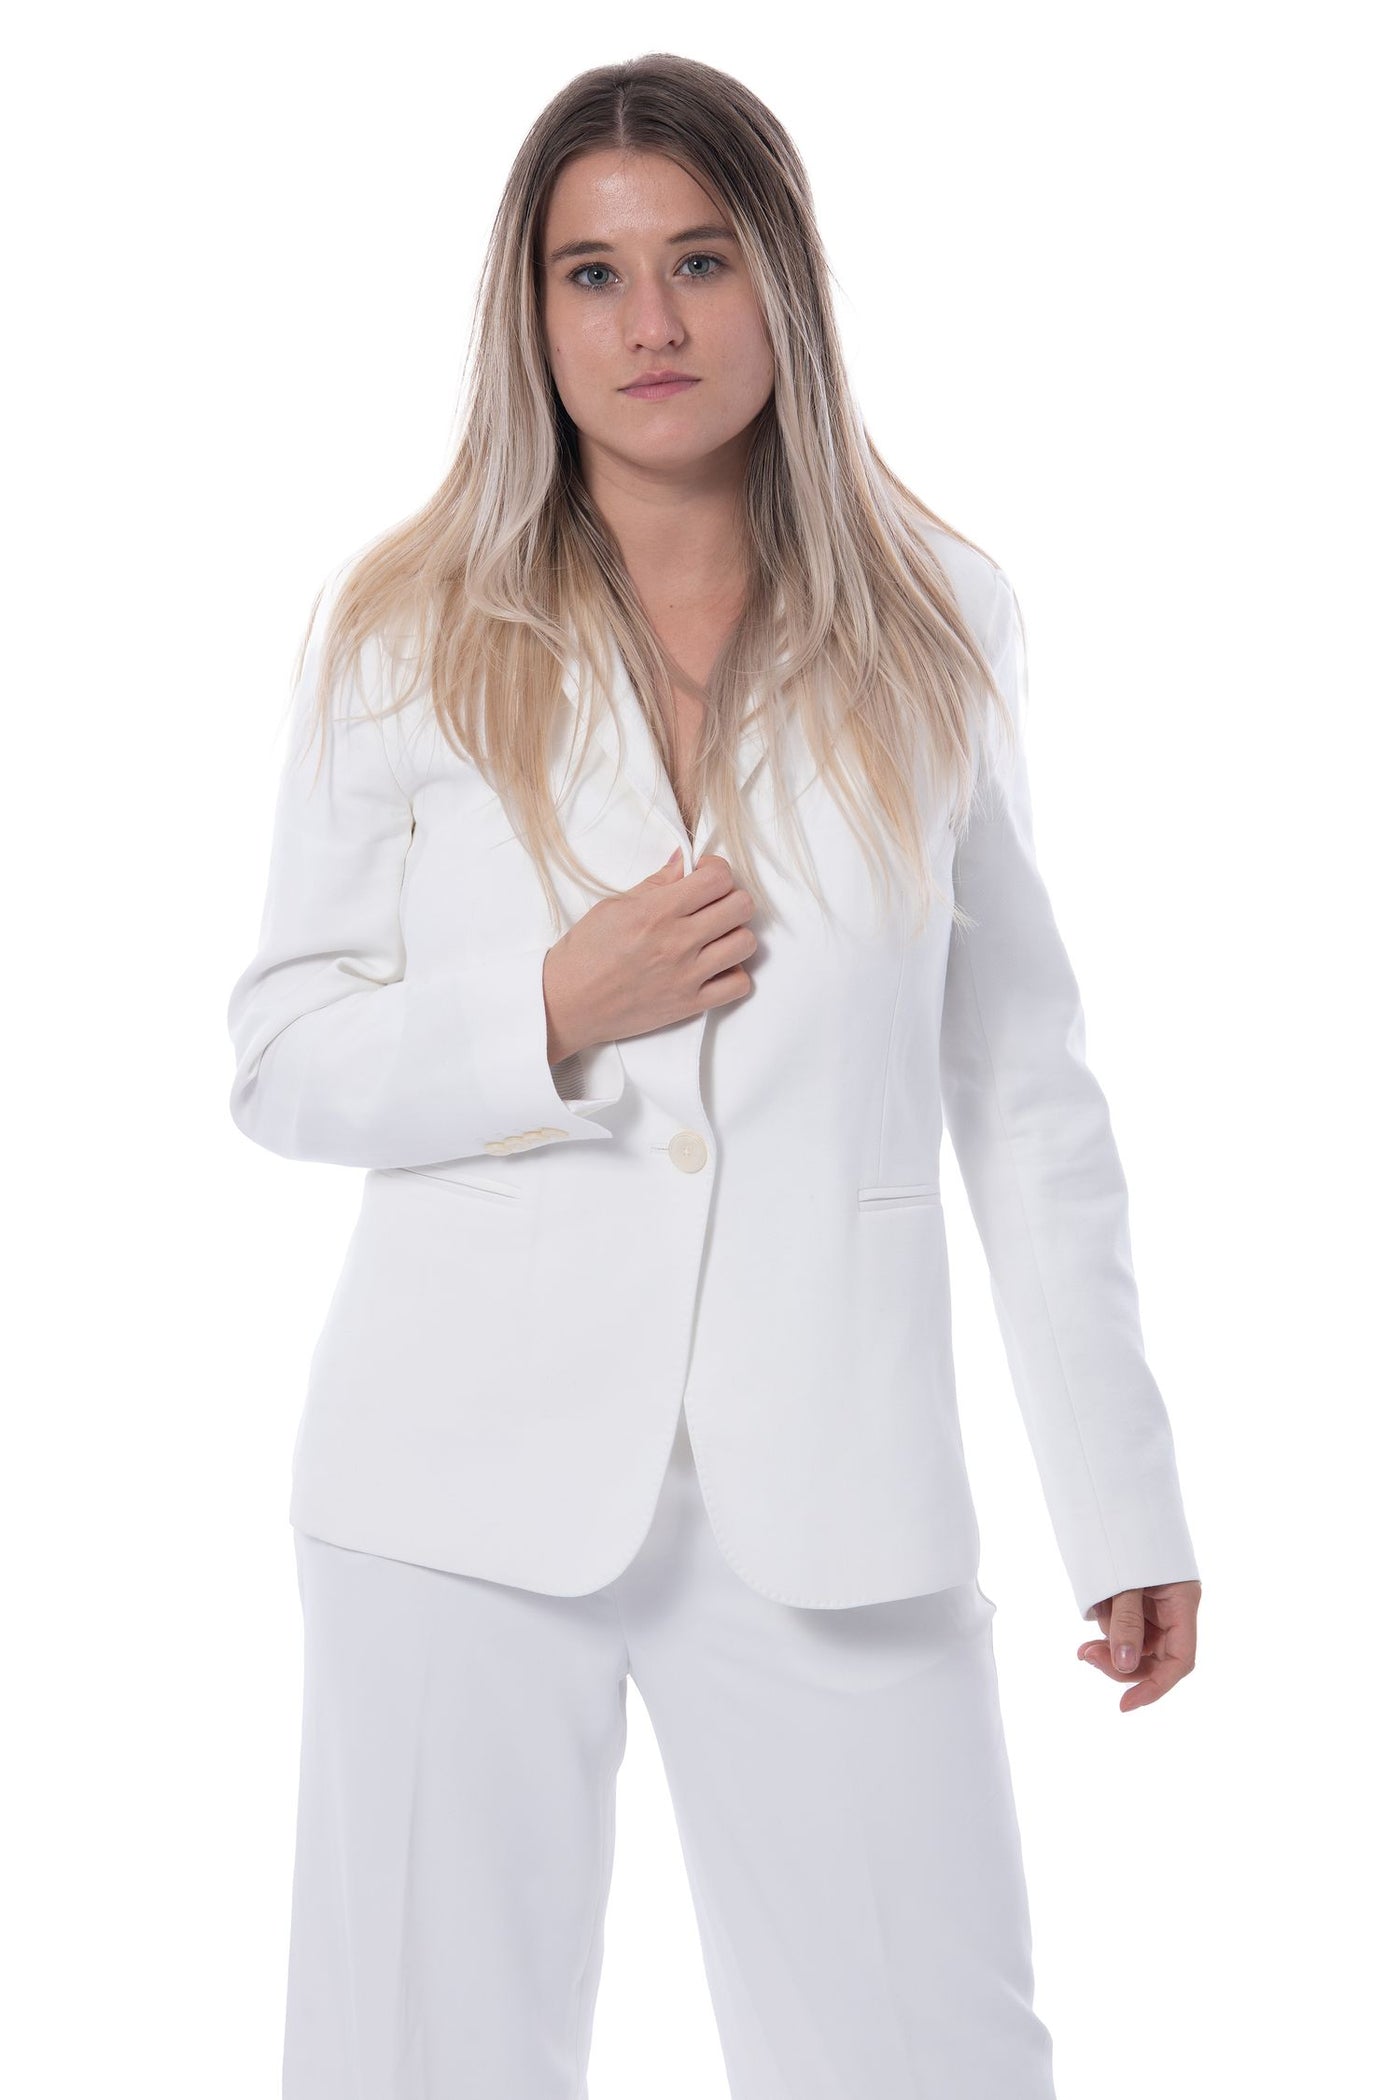 Massimo Dutti tailored white cotton blazer